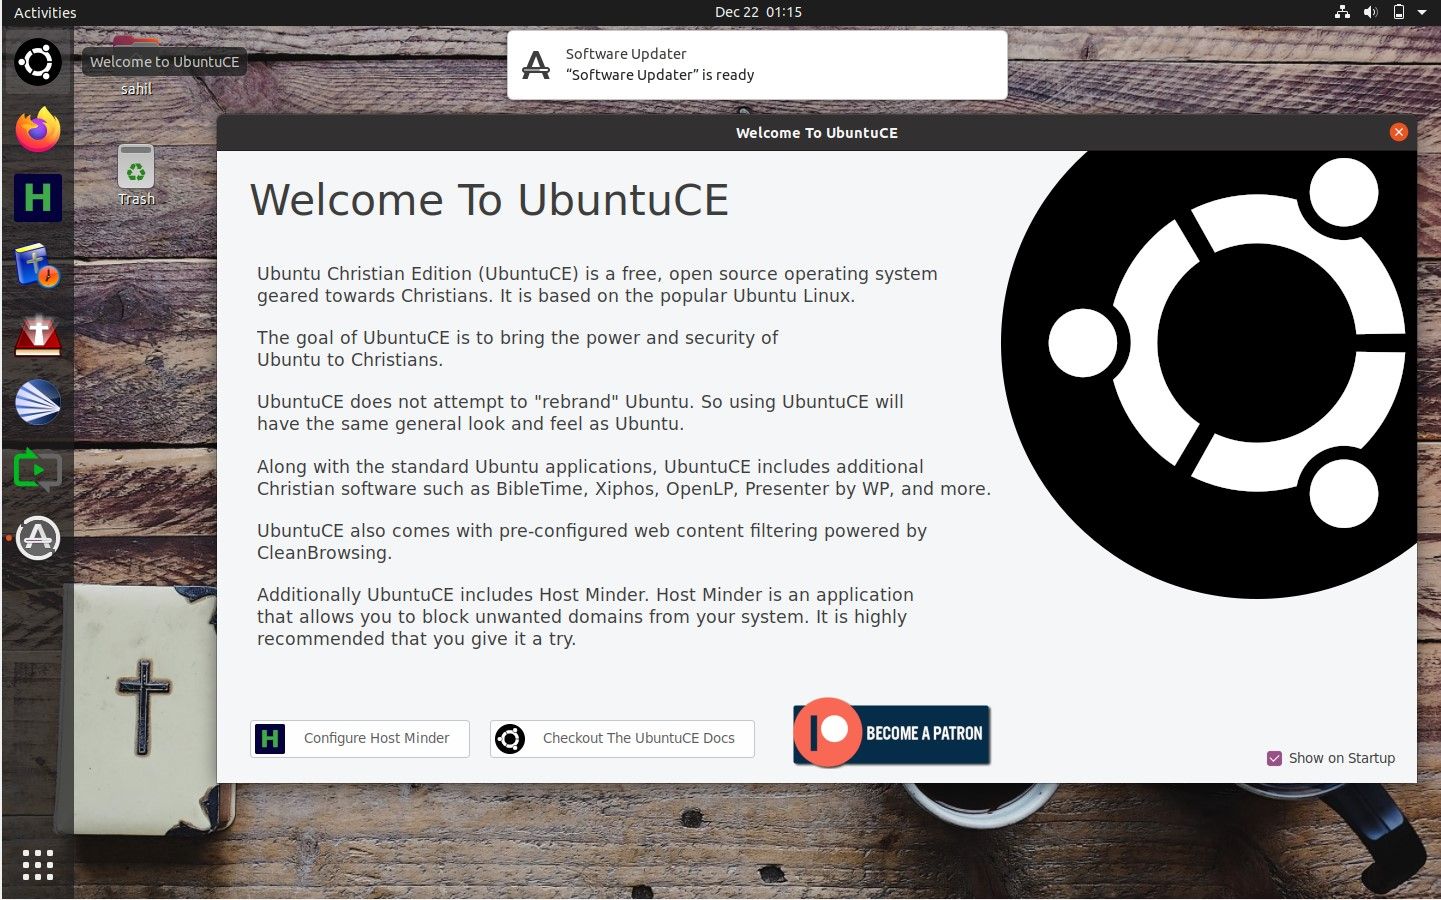 UbuntuCE desktop with an open dialog box